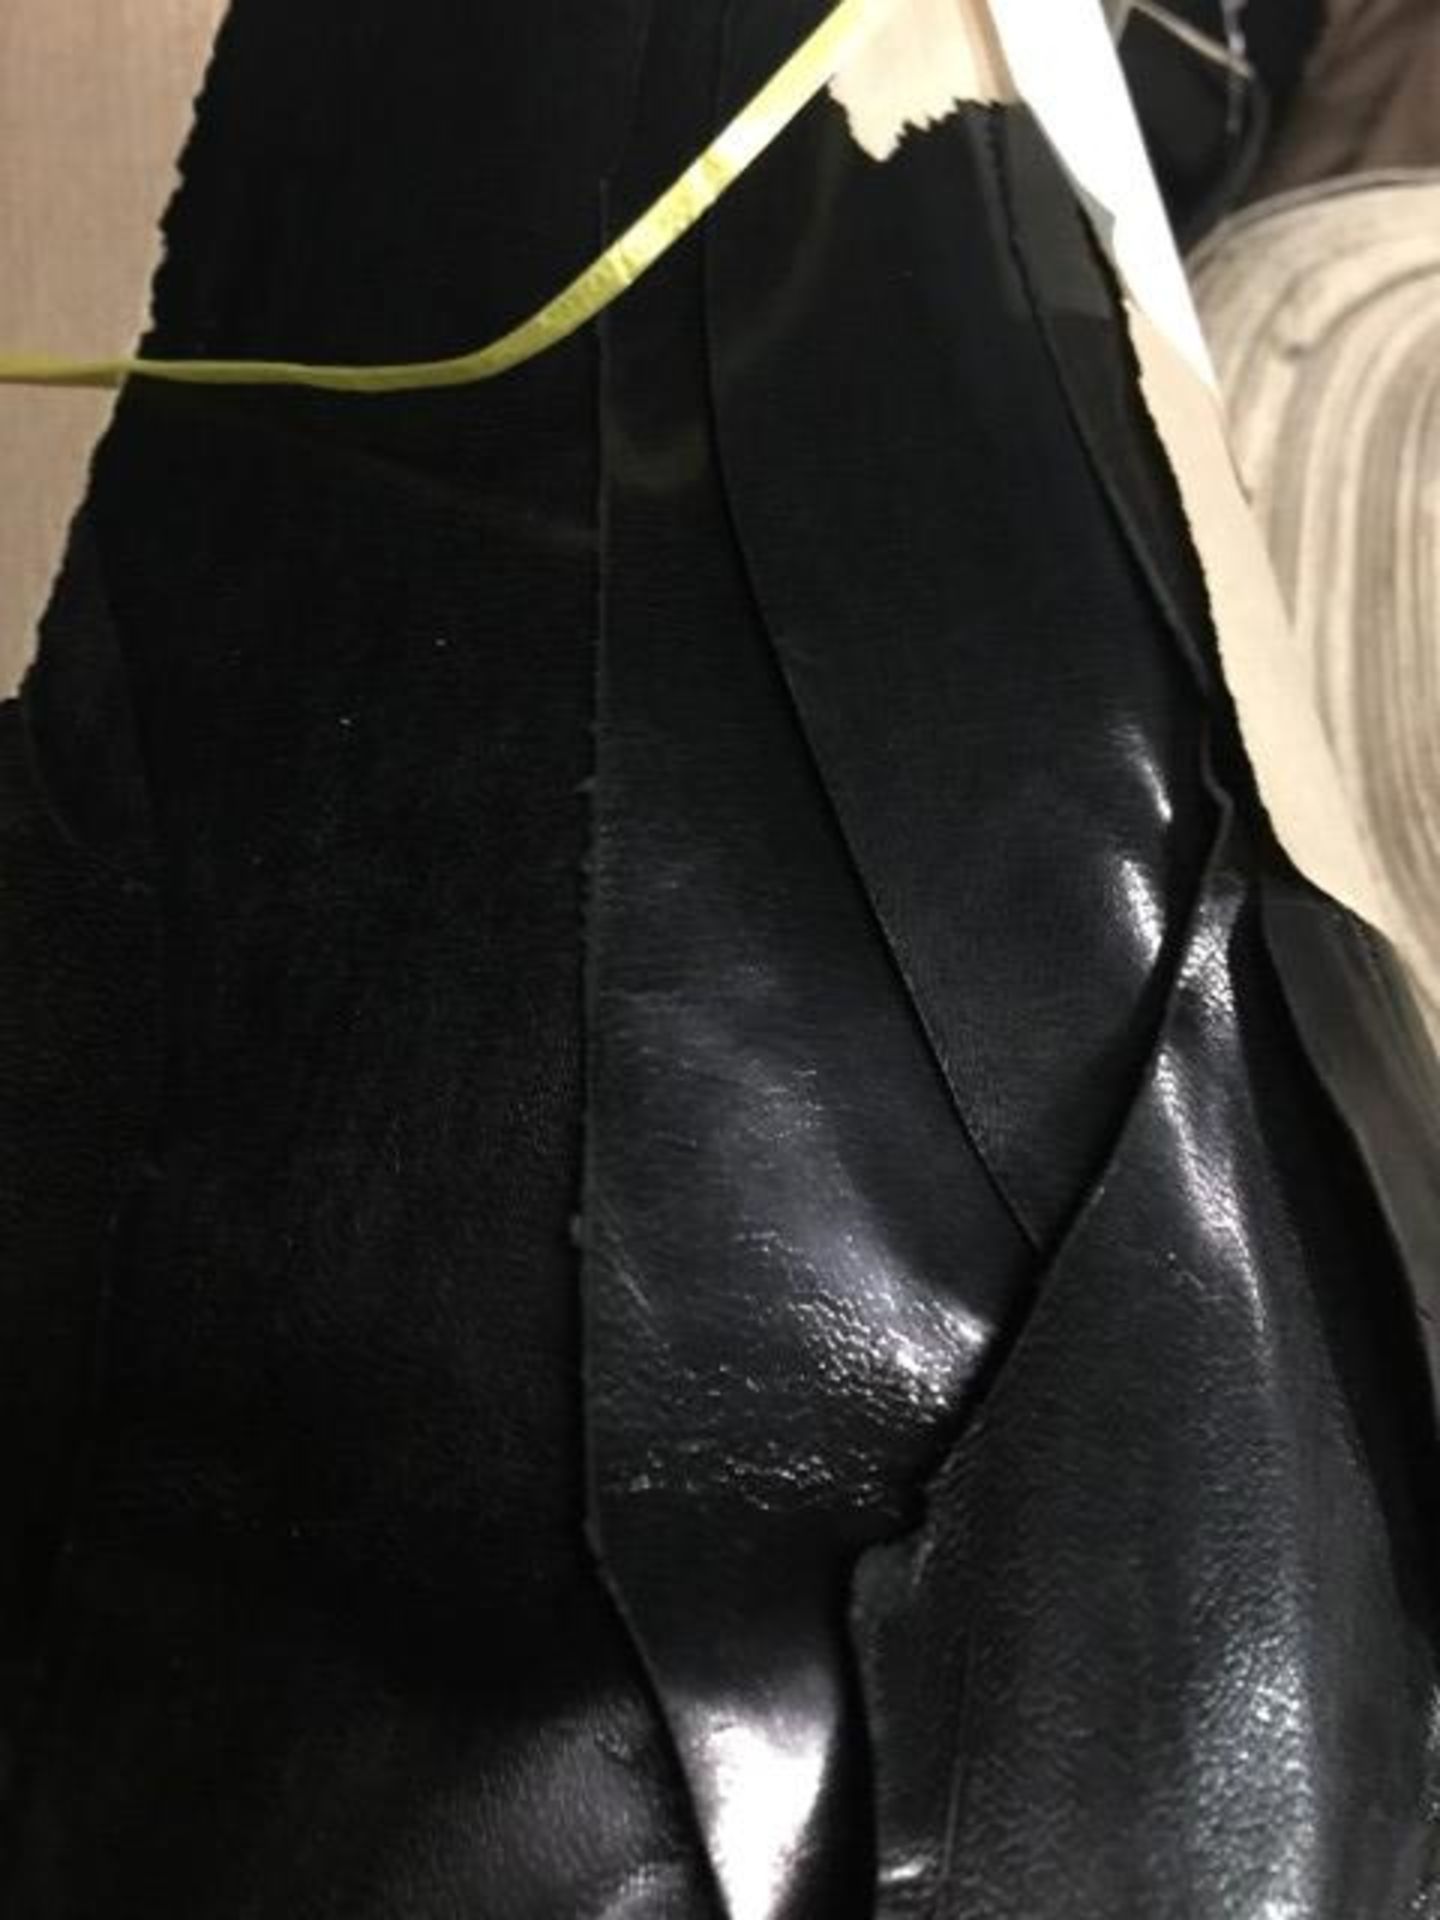 (1168) Sq. Ft., 1.5 Oz. Black Patent Leather Sides